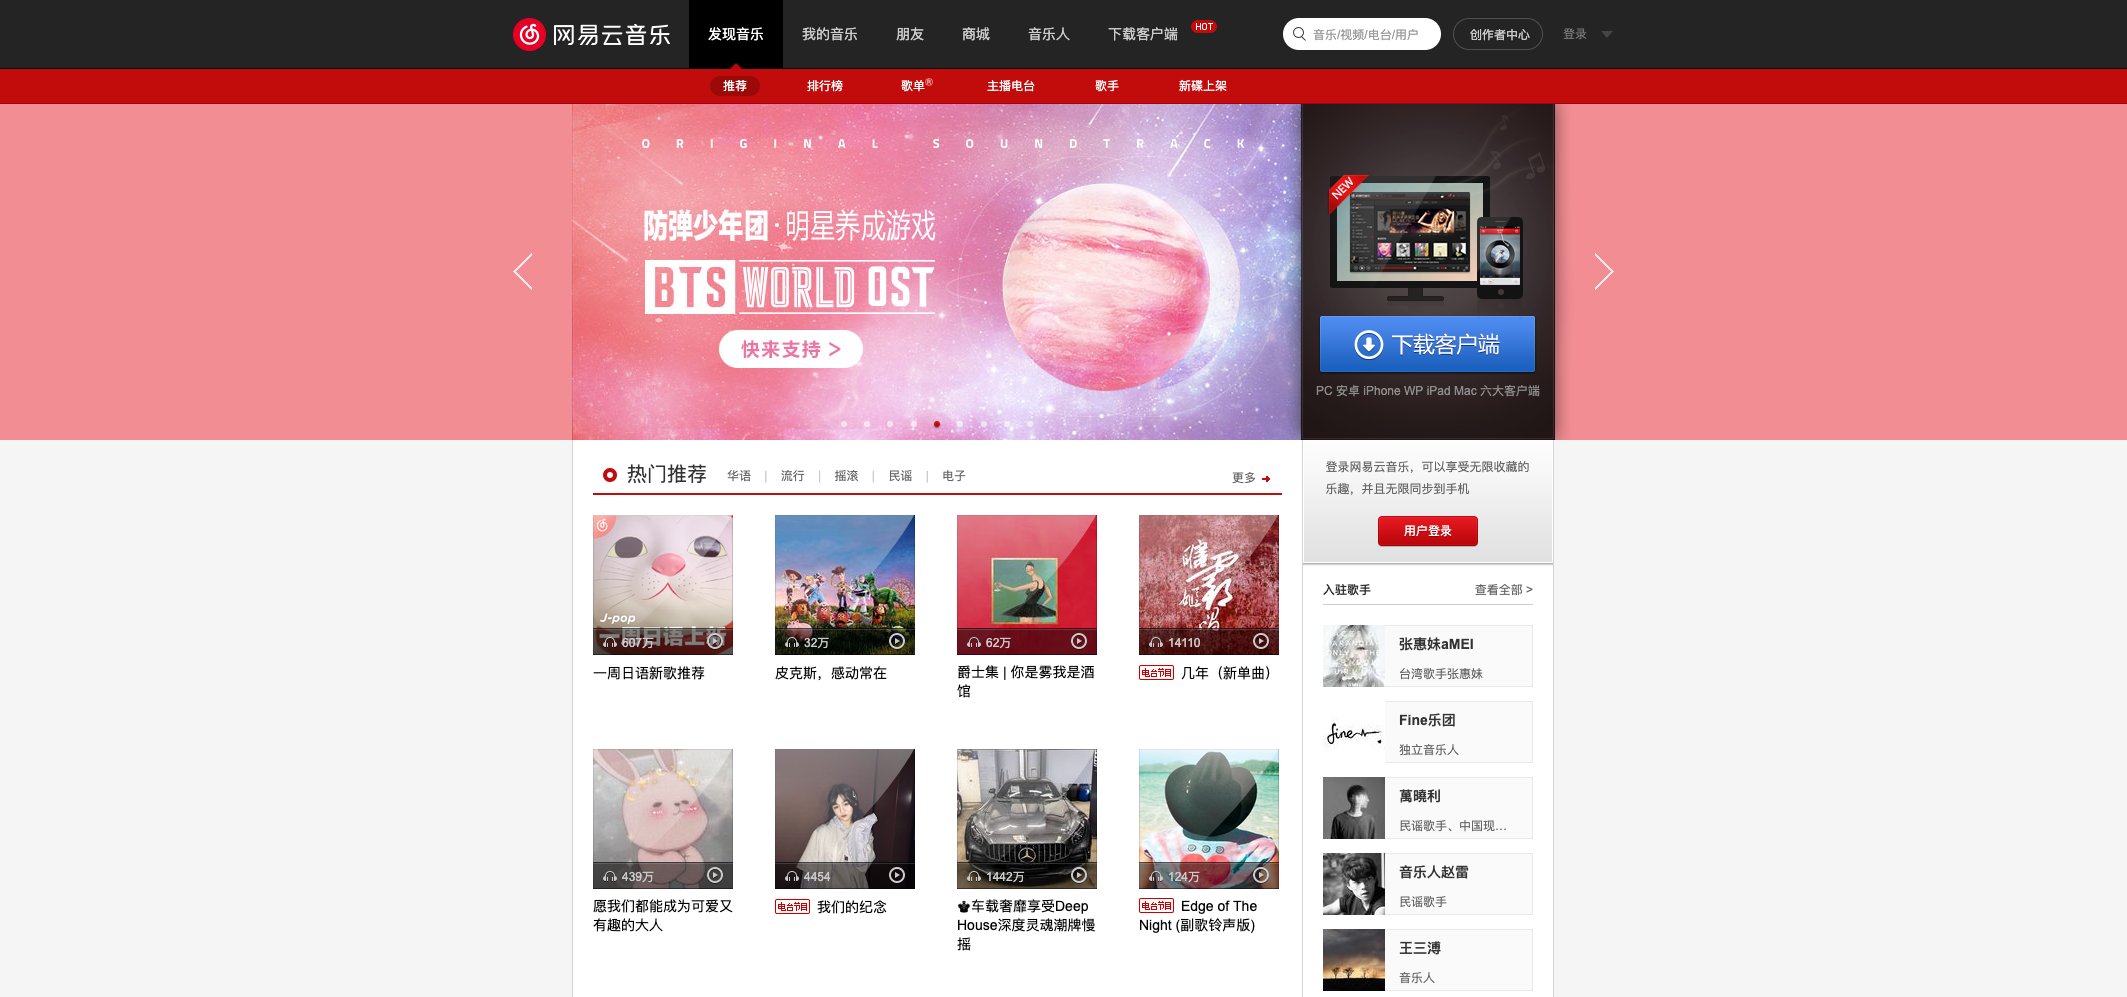 Popular music streaming app NetEase Cloud Music also hosts podcasts. (Picture: NetEase Cloud Music)